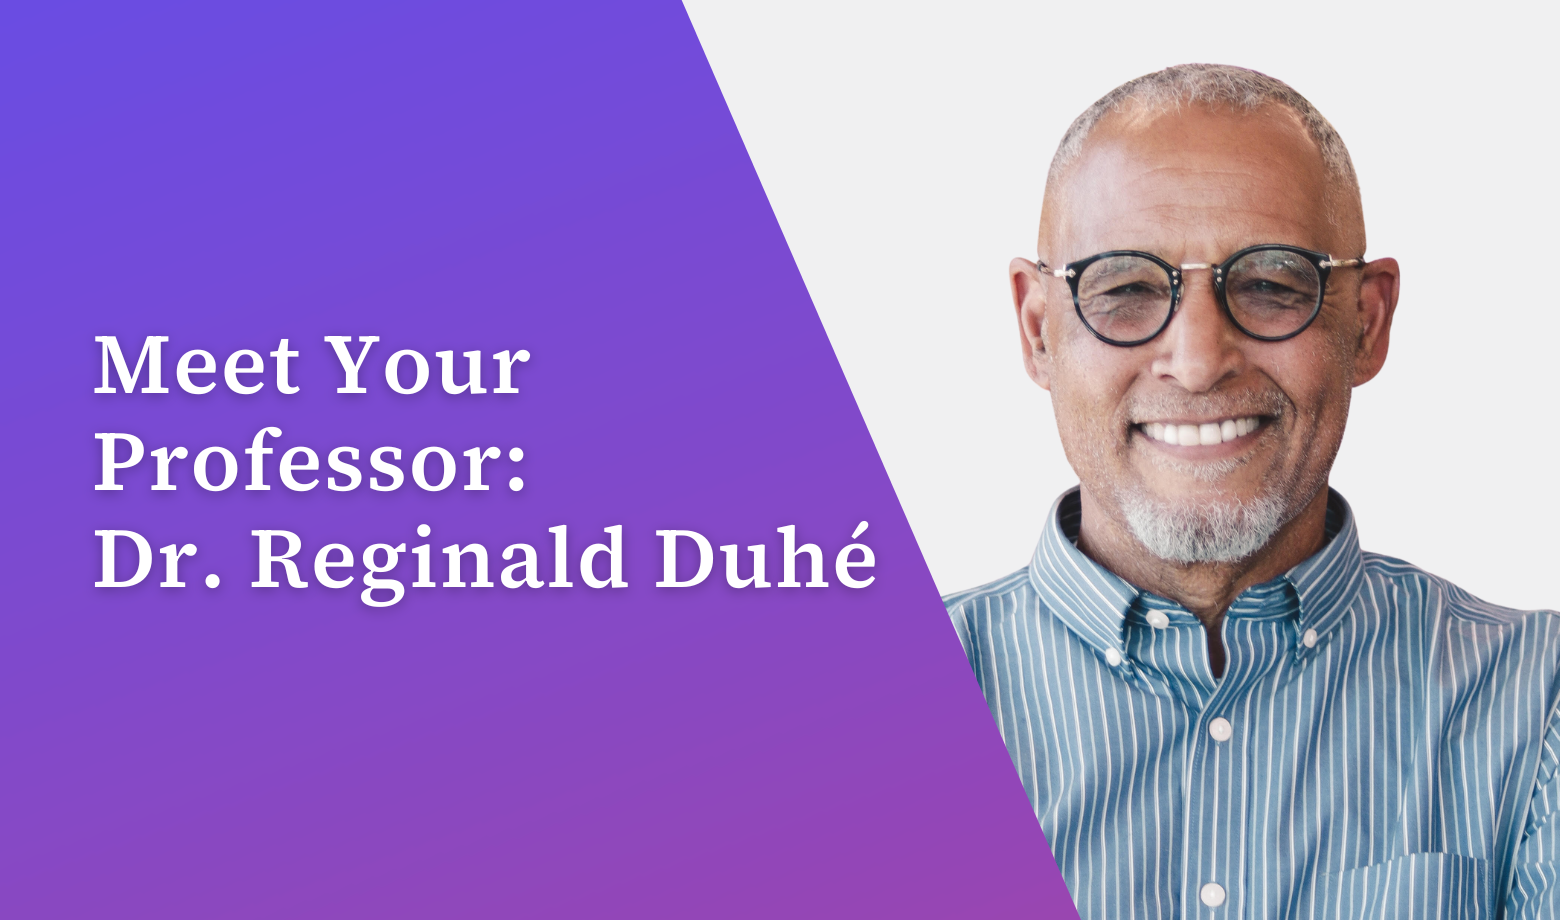 Meet Your Professor: Dr. Reginald Duhé